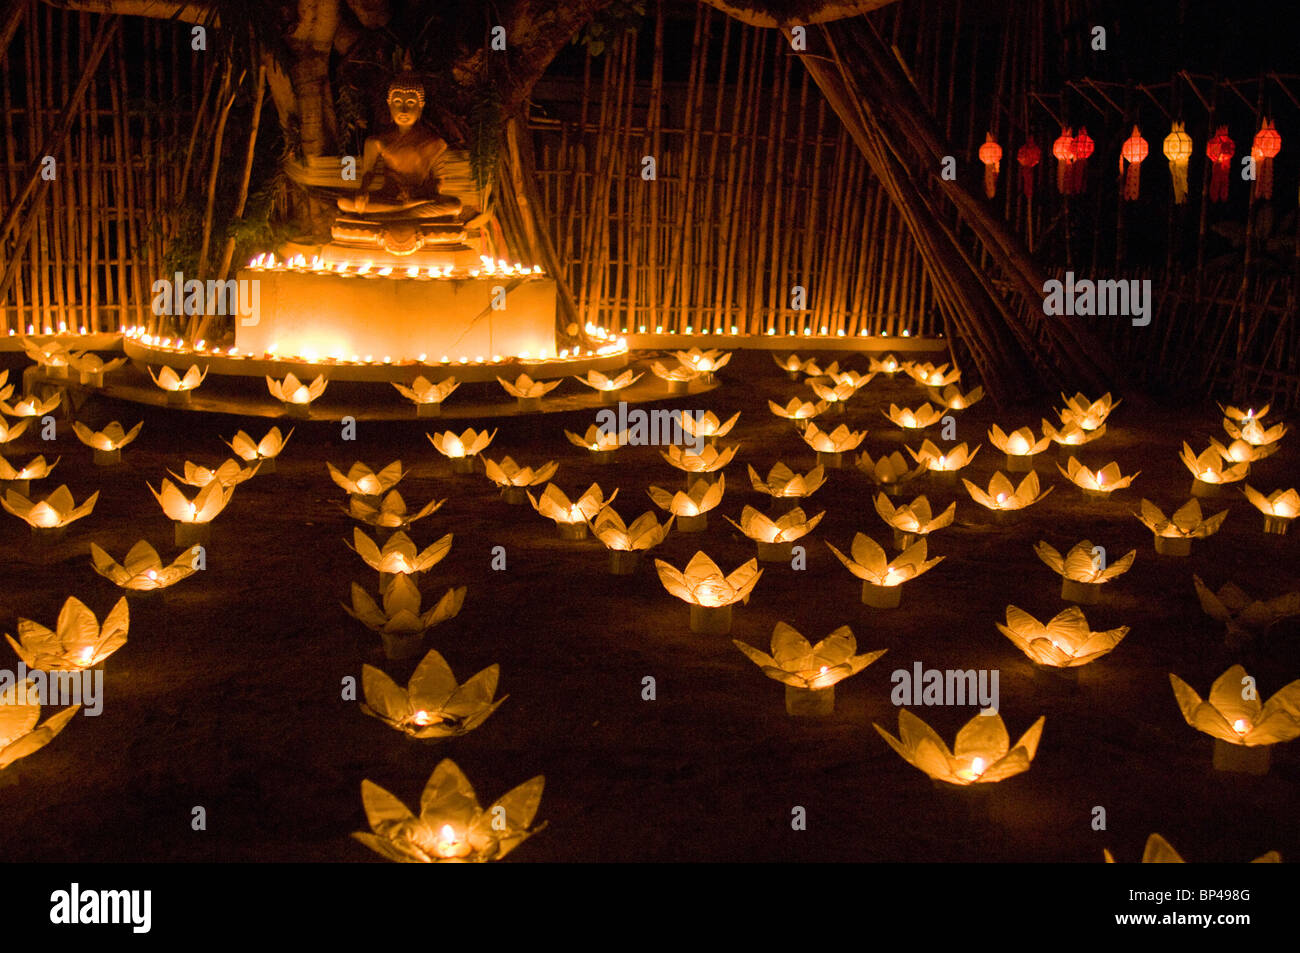 Monks lighting khom loy candles and lanterns for Loi Krathong festival. Stock Photo